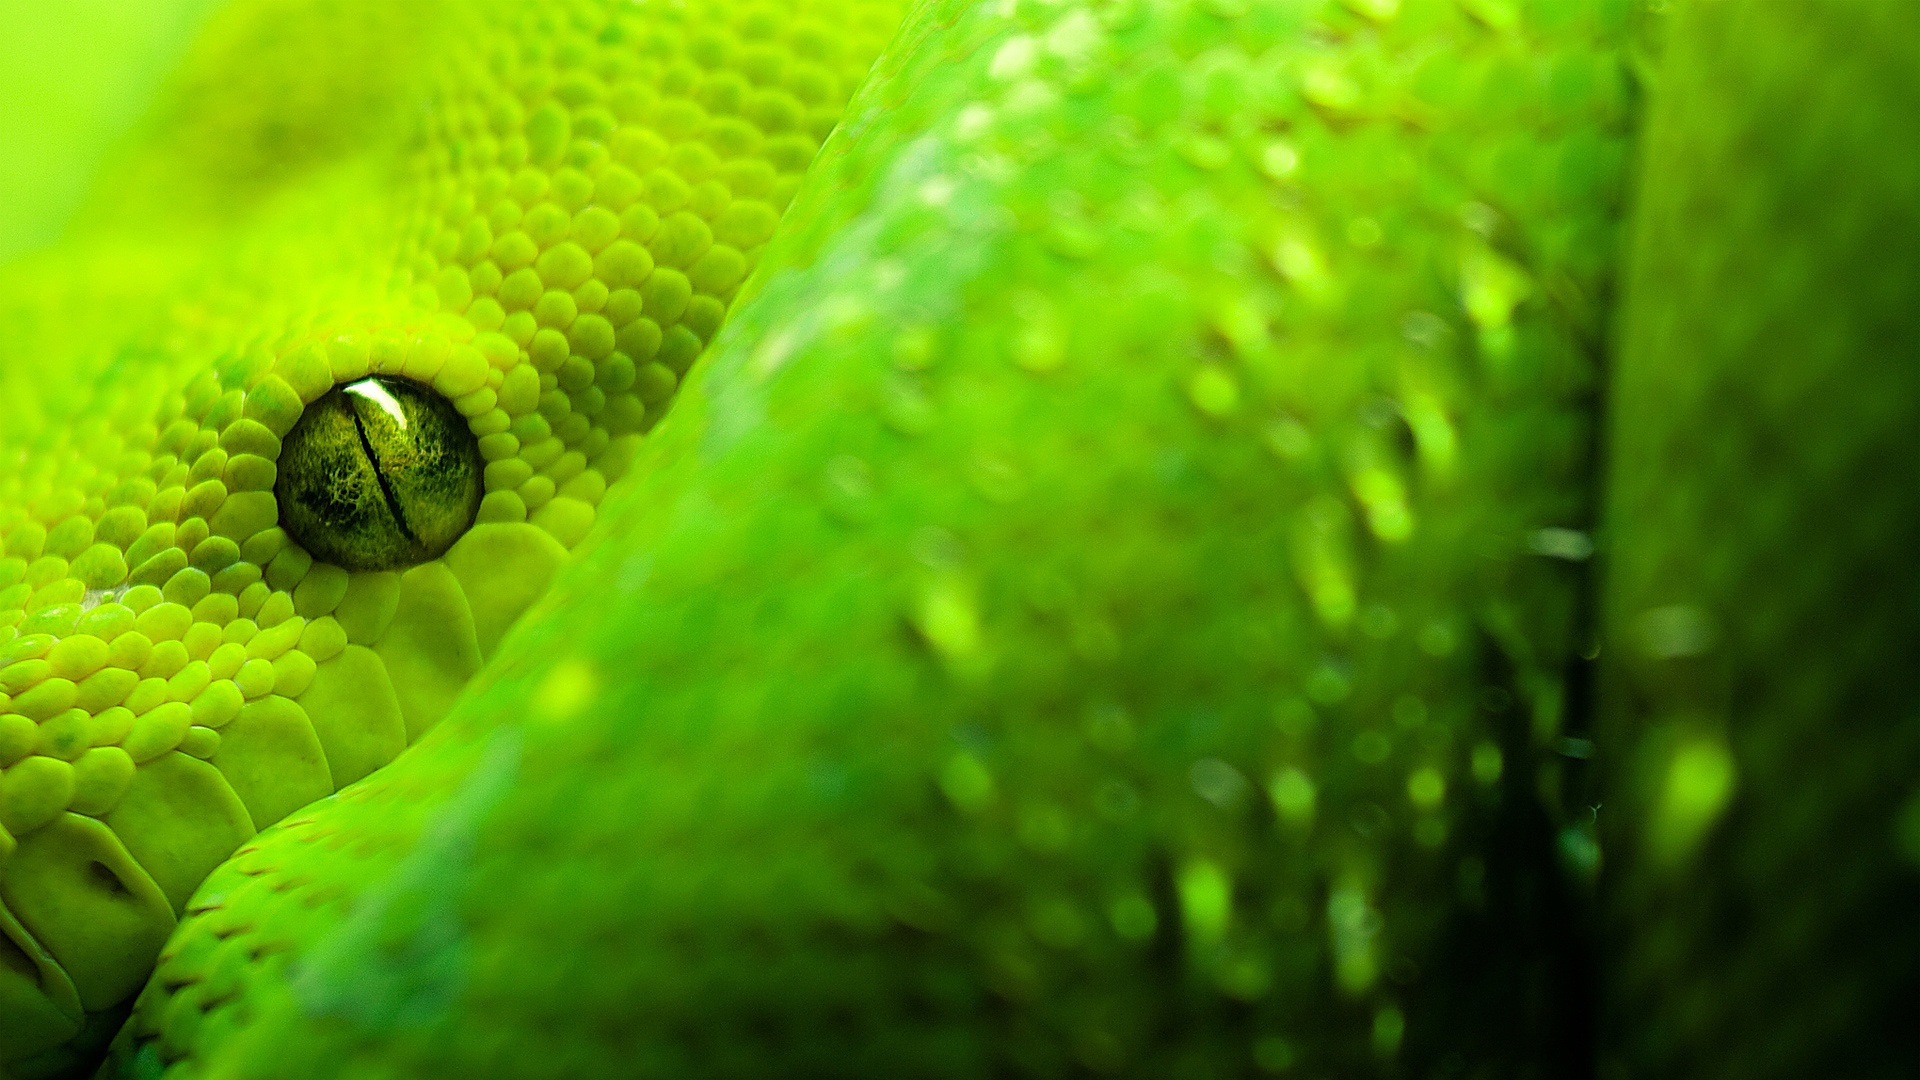 Green Snake Pictures Animal Biography Hot Photos Videos Wallpaper